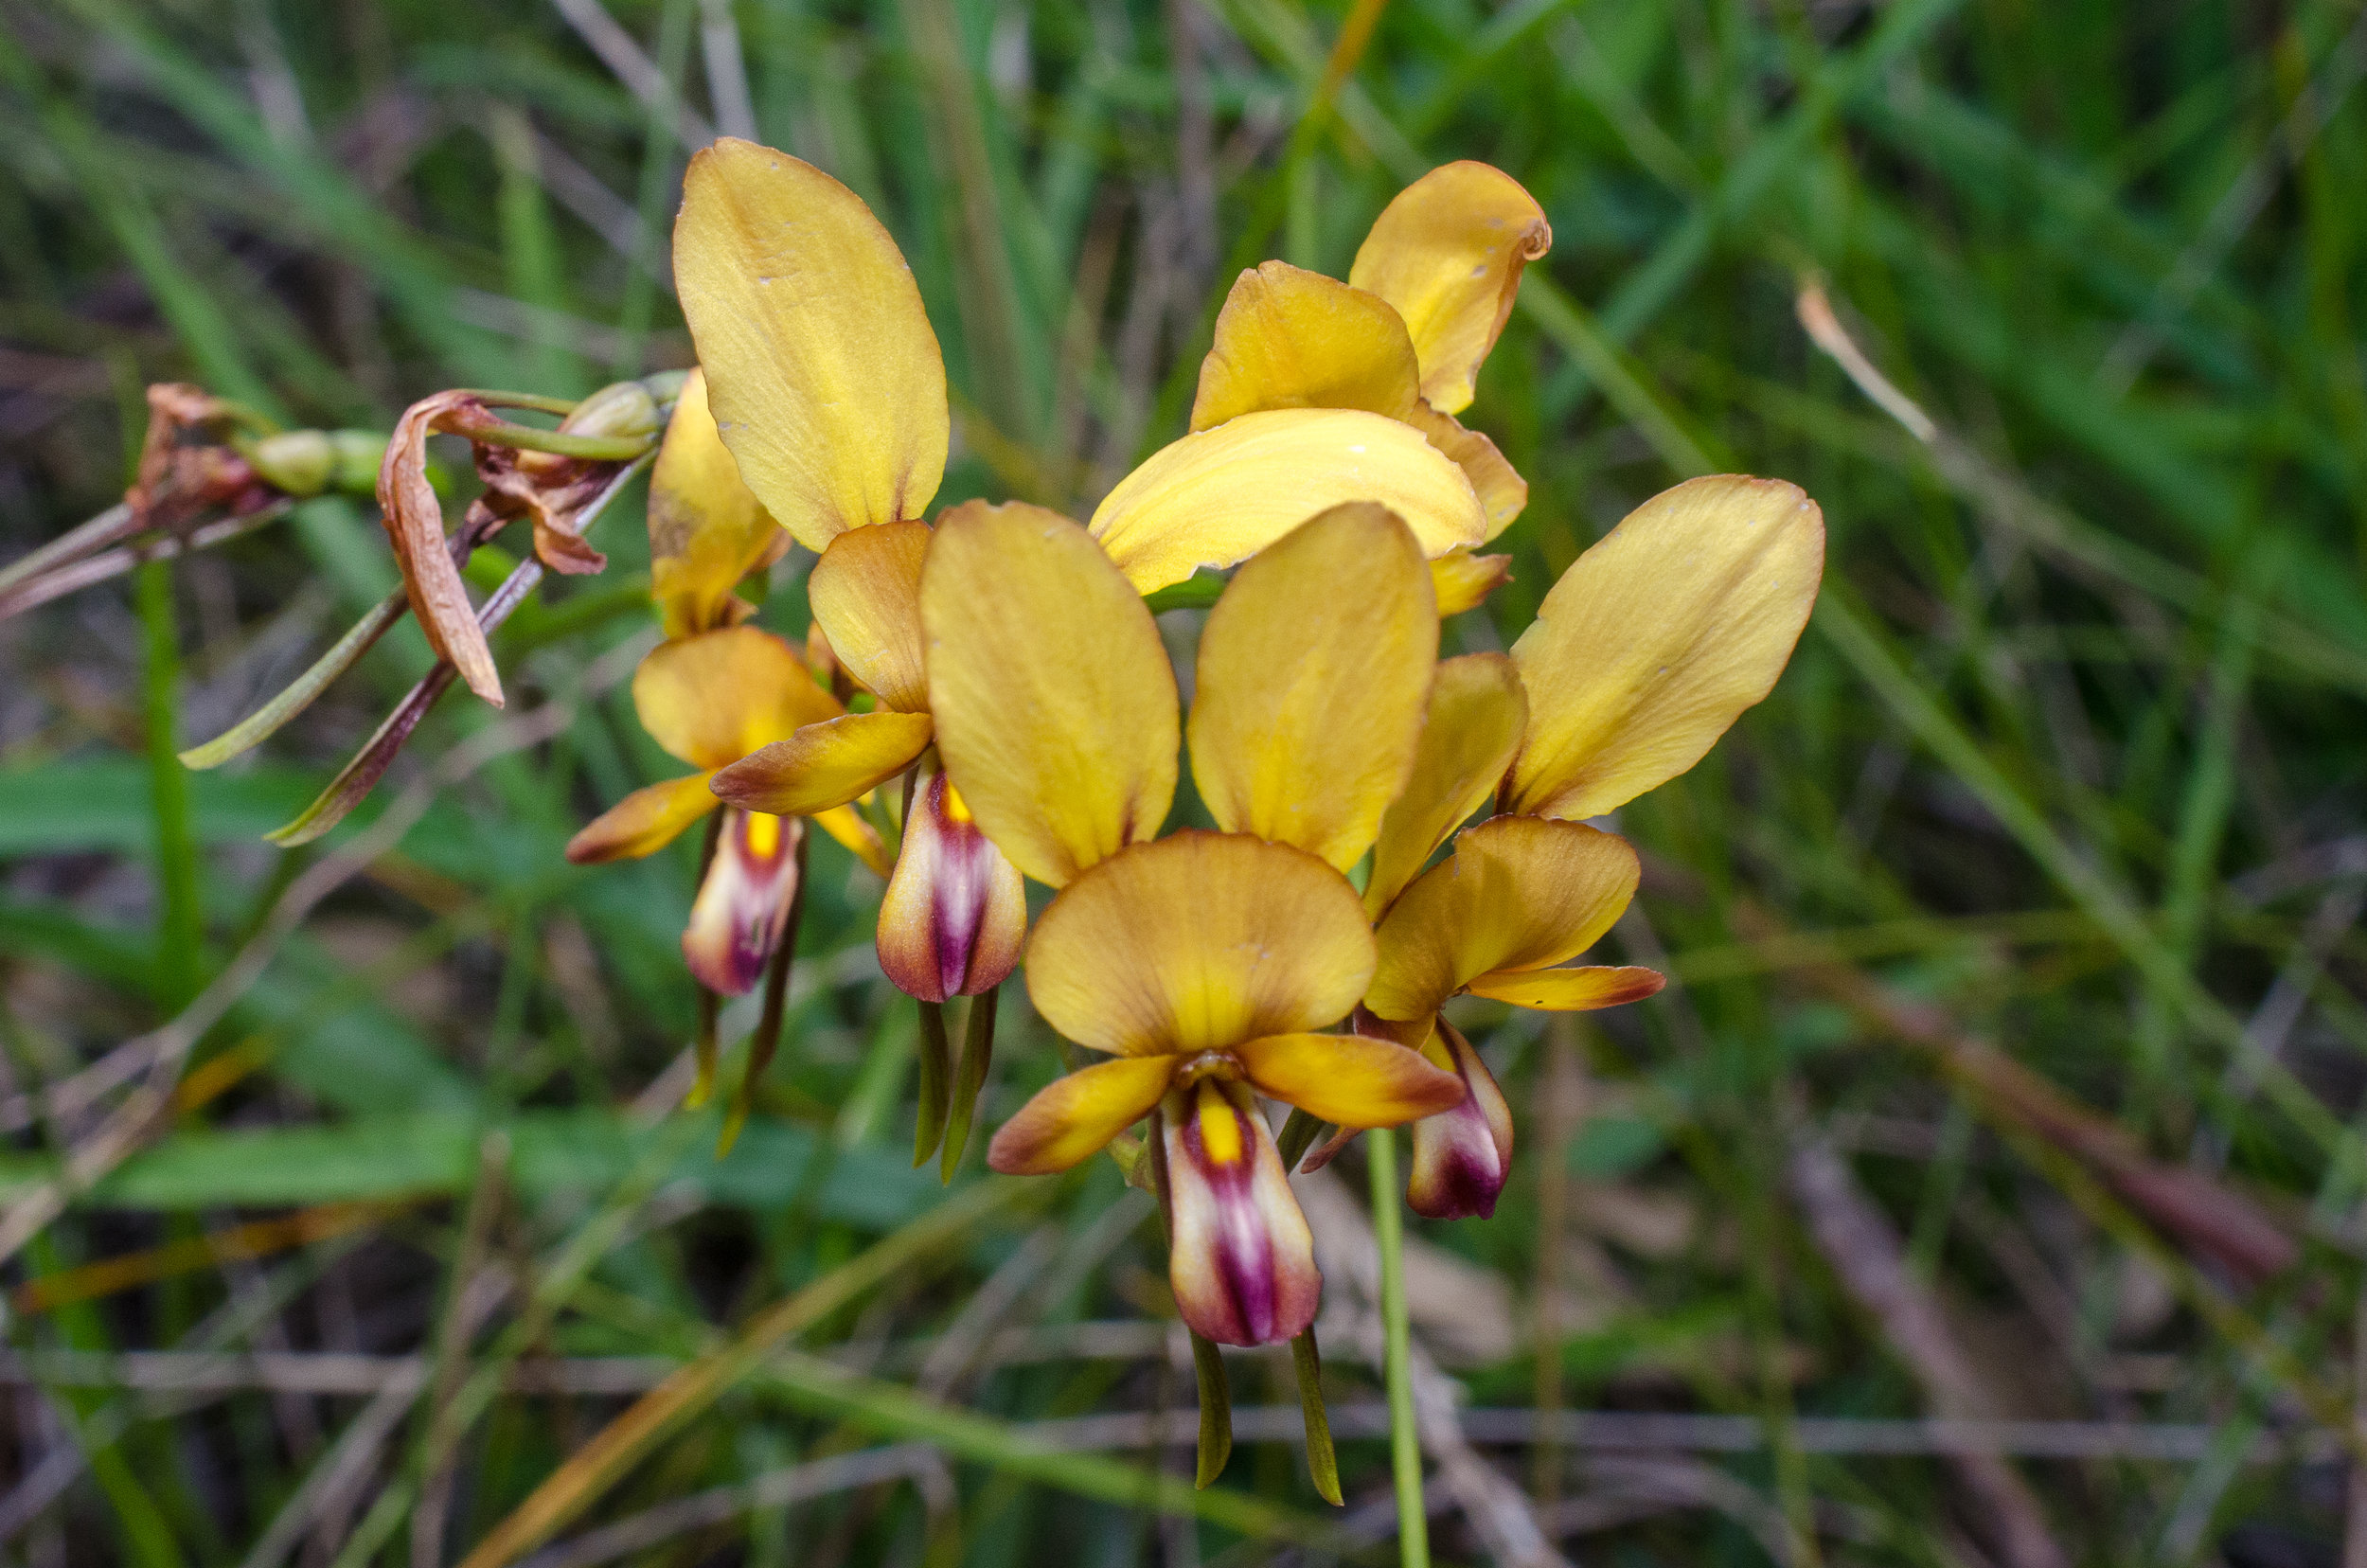  Diuris sp. Yalgorup - Yalgorup donkey orchid, Island Point Reserve, near Mandurah 